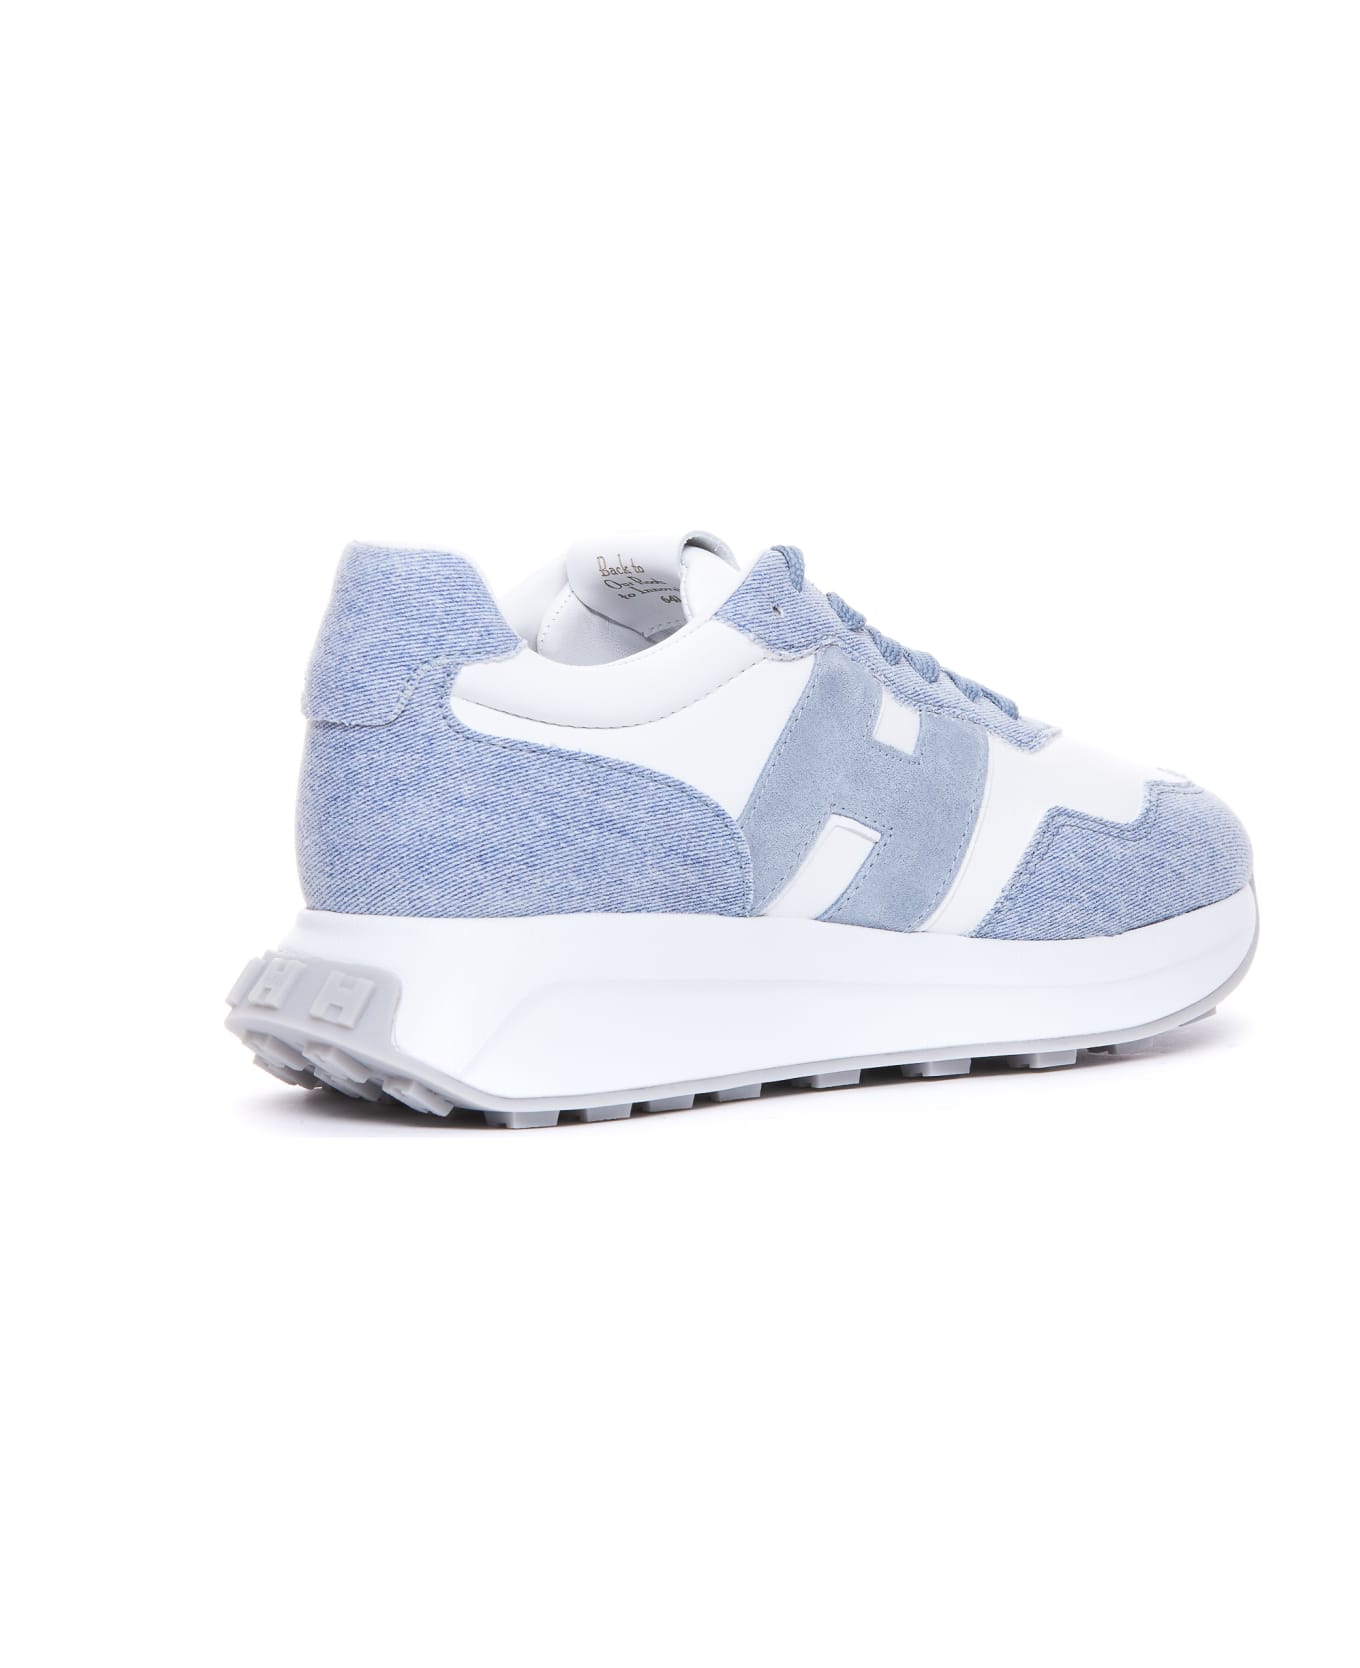 Hogan H641 H Patch Sneakers - Blue スニーカー